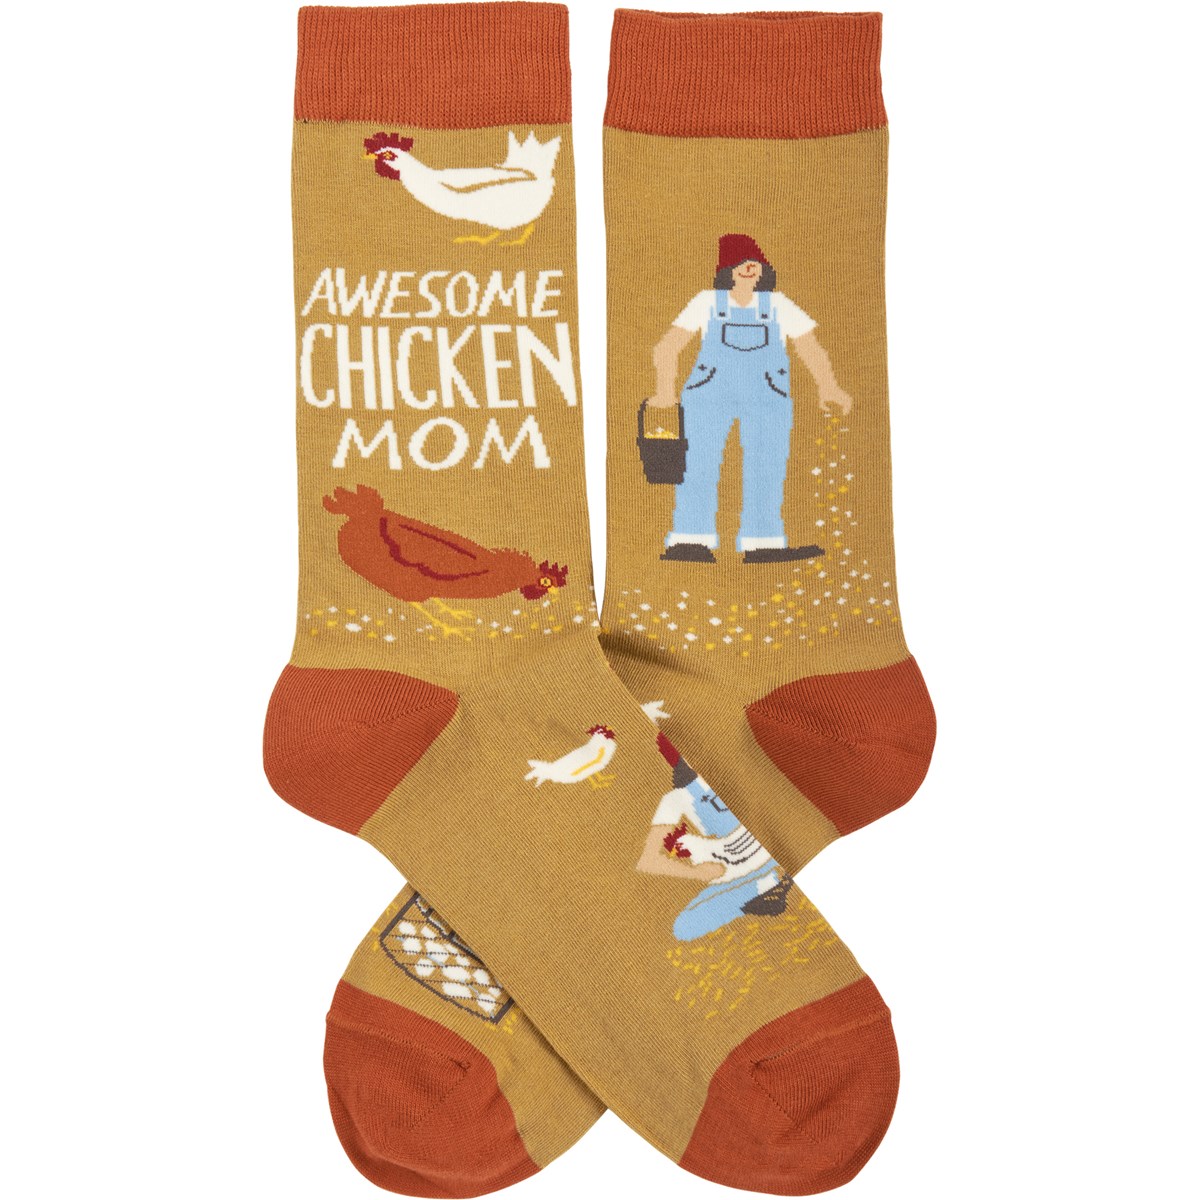 Awesome Chicken Mom Socks - Cotton, Nylon, Spandex